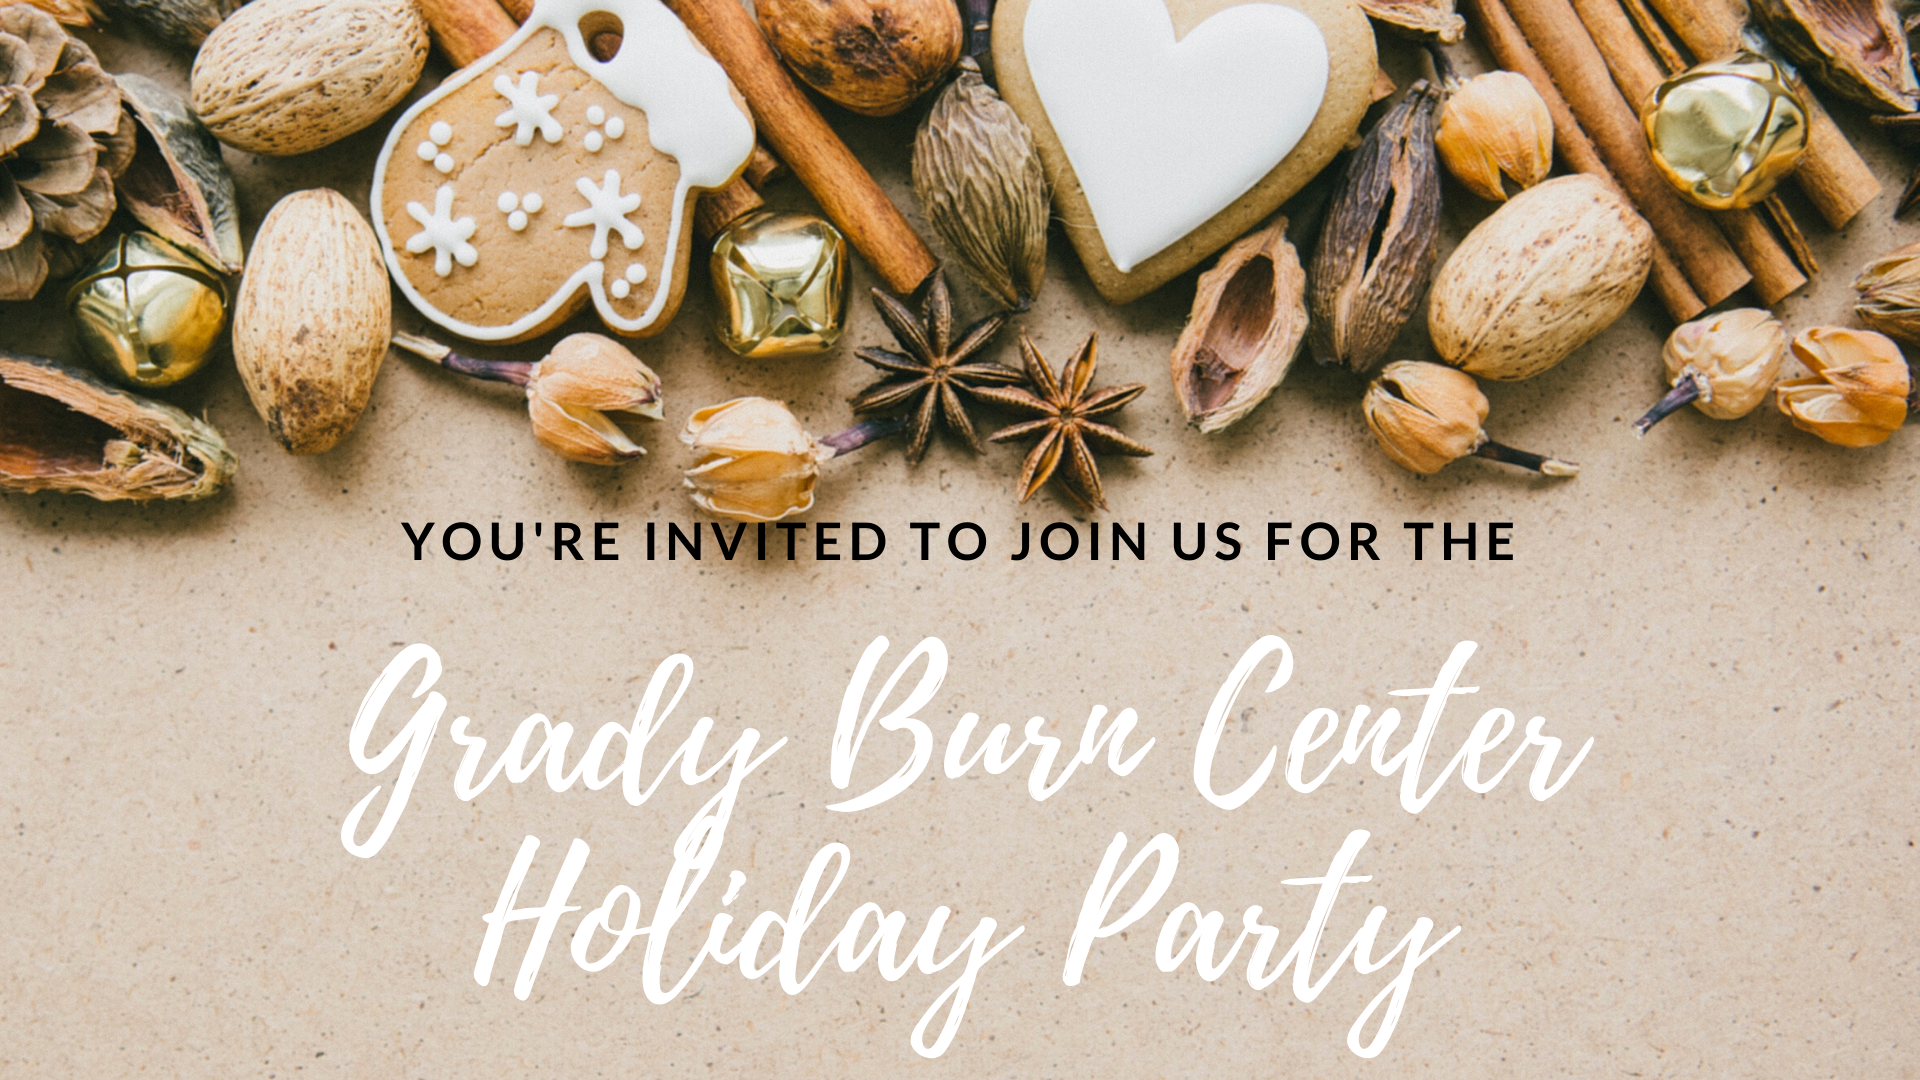 Holiday Party at Grady Burn Center